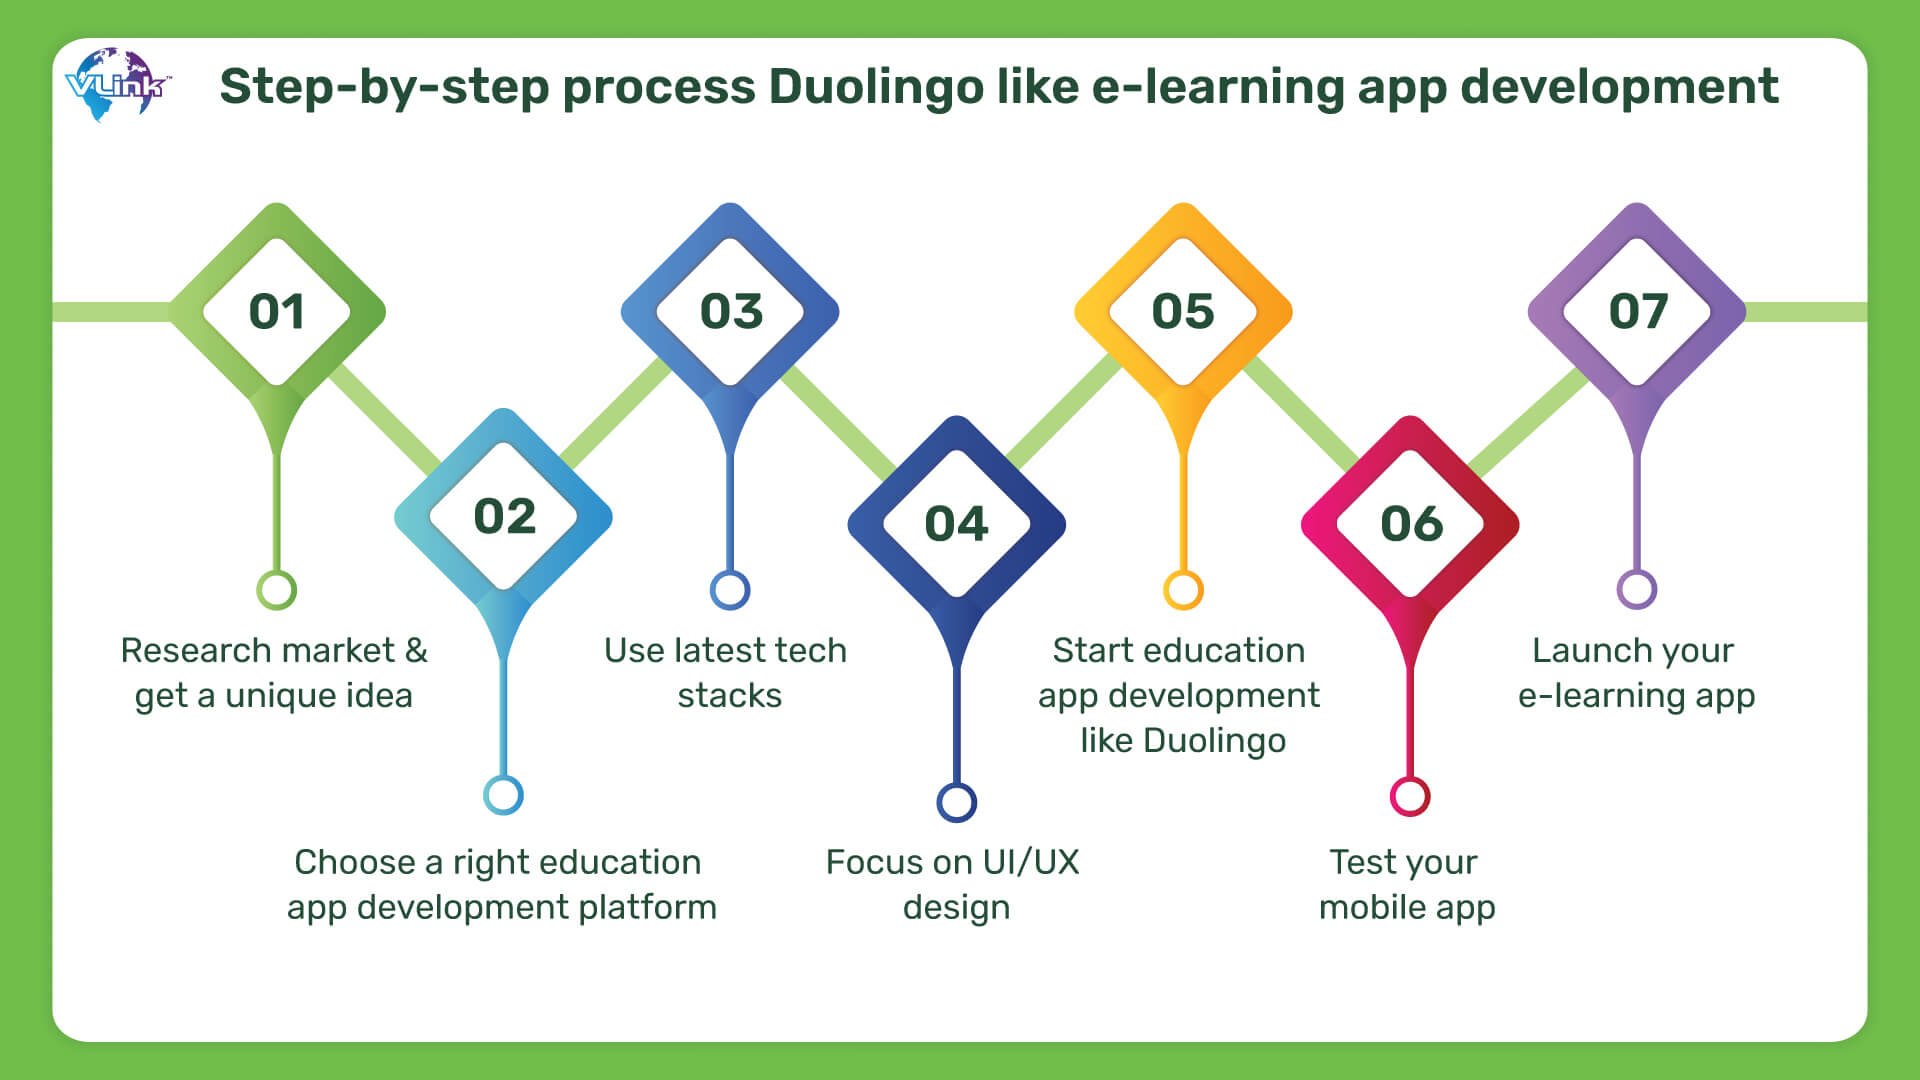 Step-by-step process to build a language learning app like Duolingo 